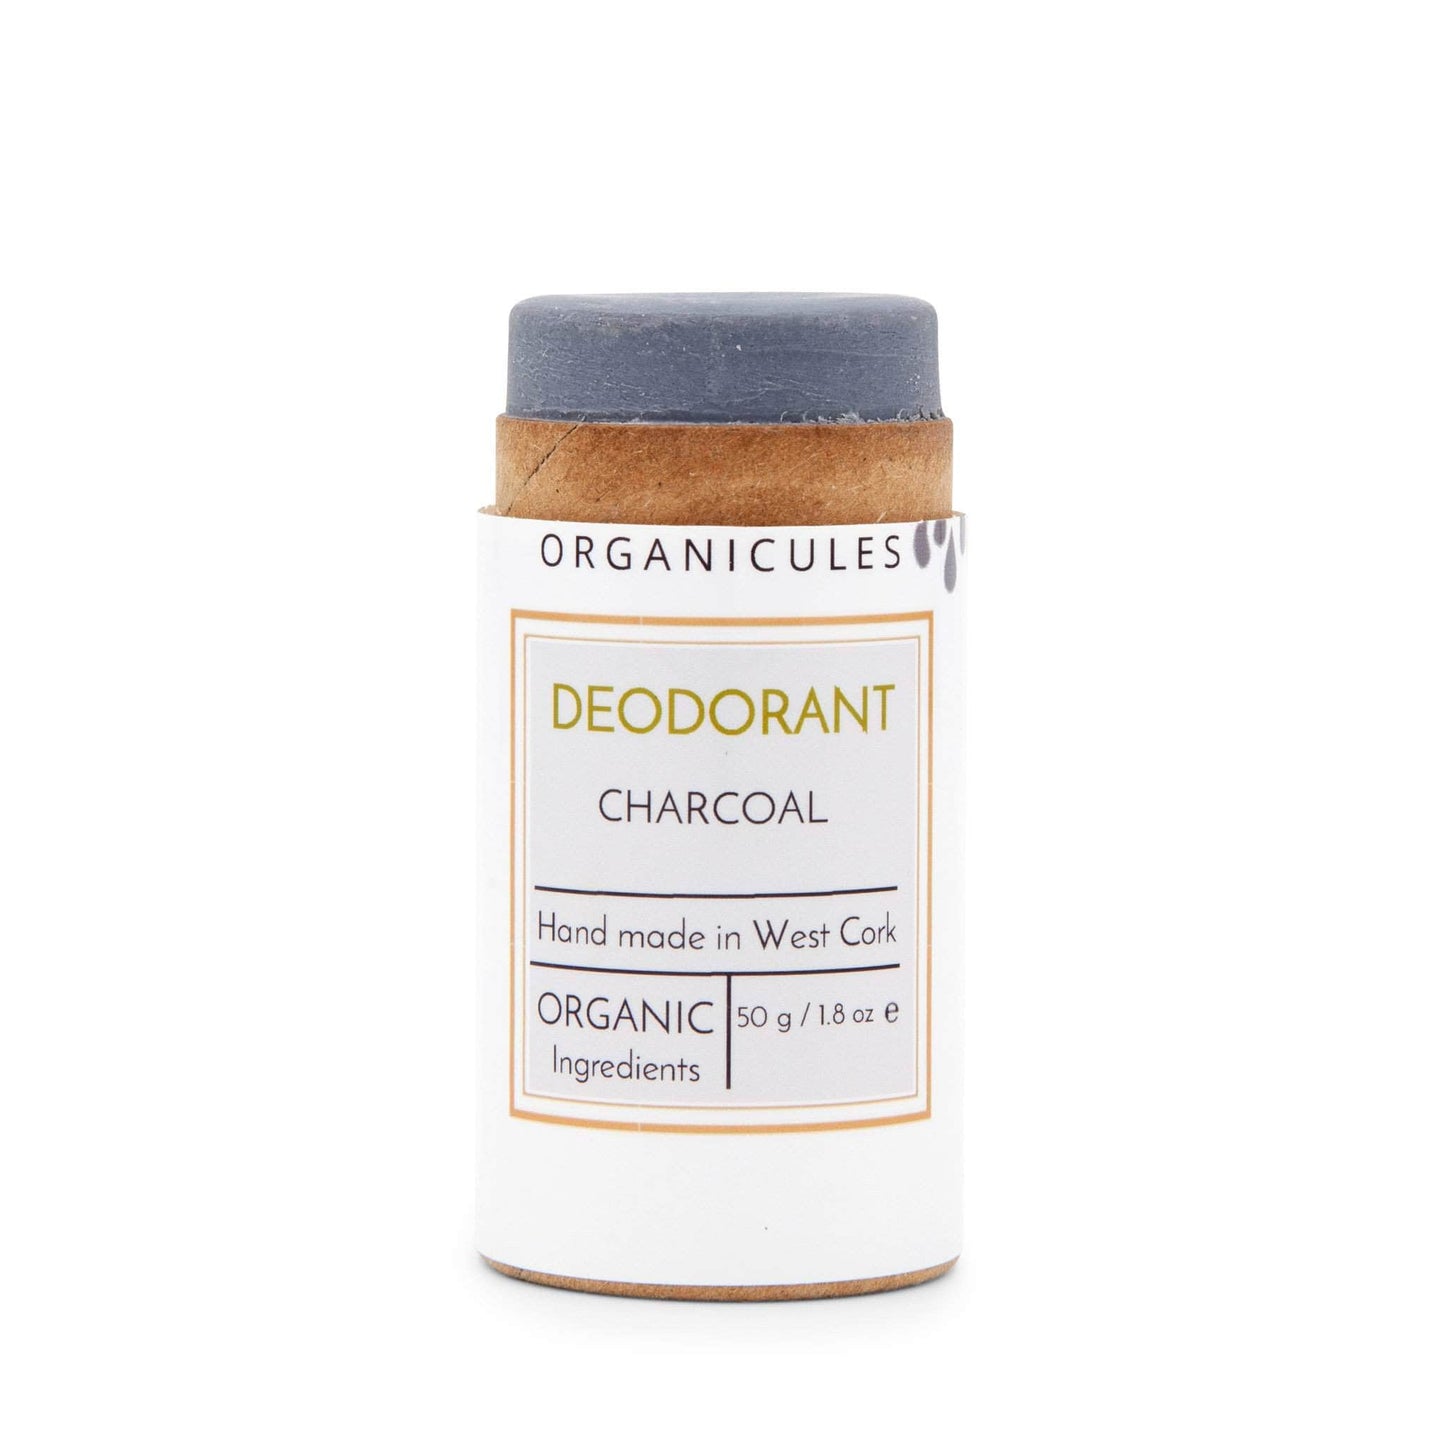 Organicules Natural Deodorant - Charcoal